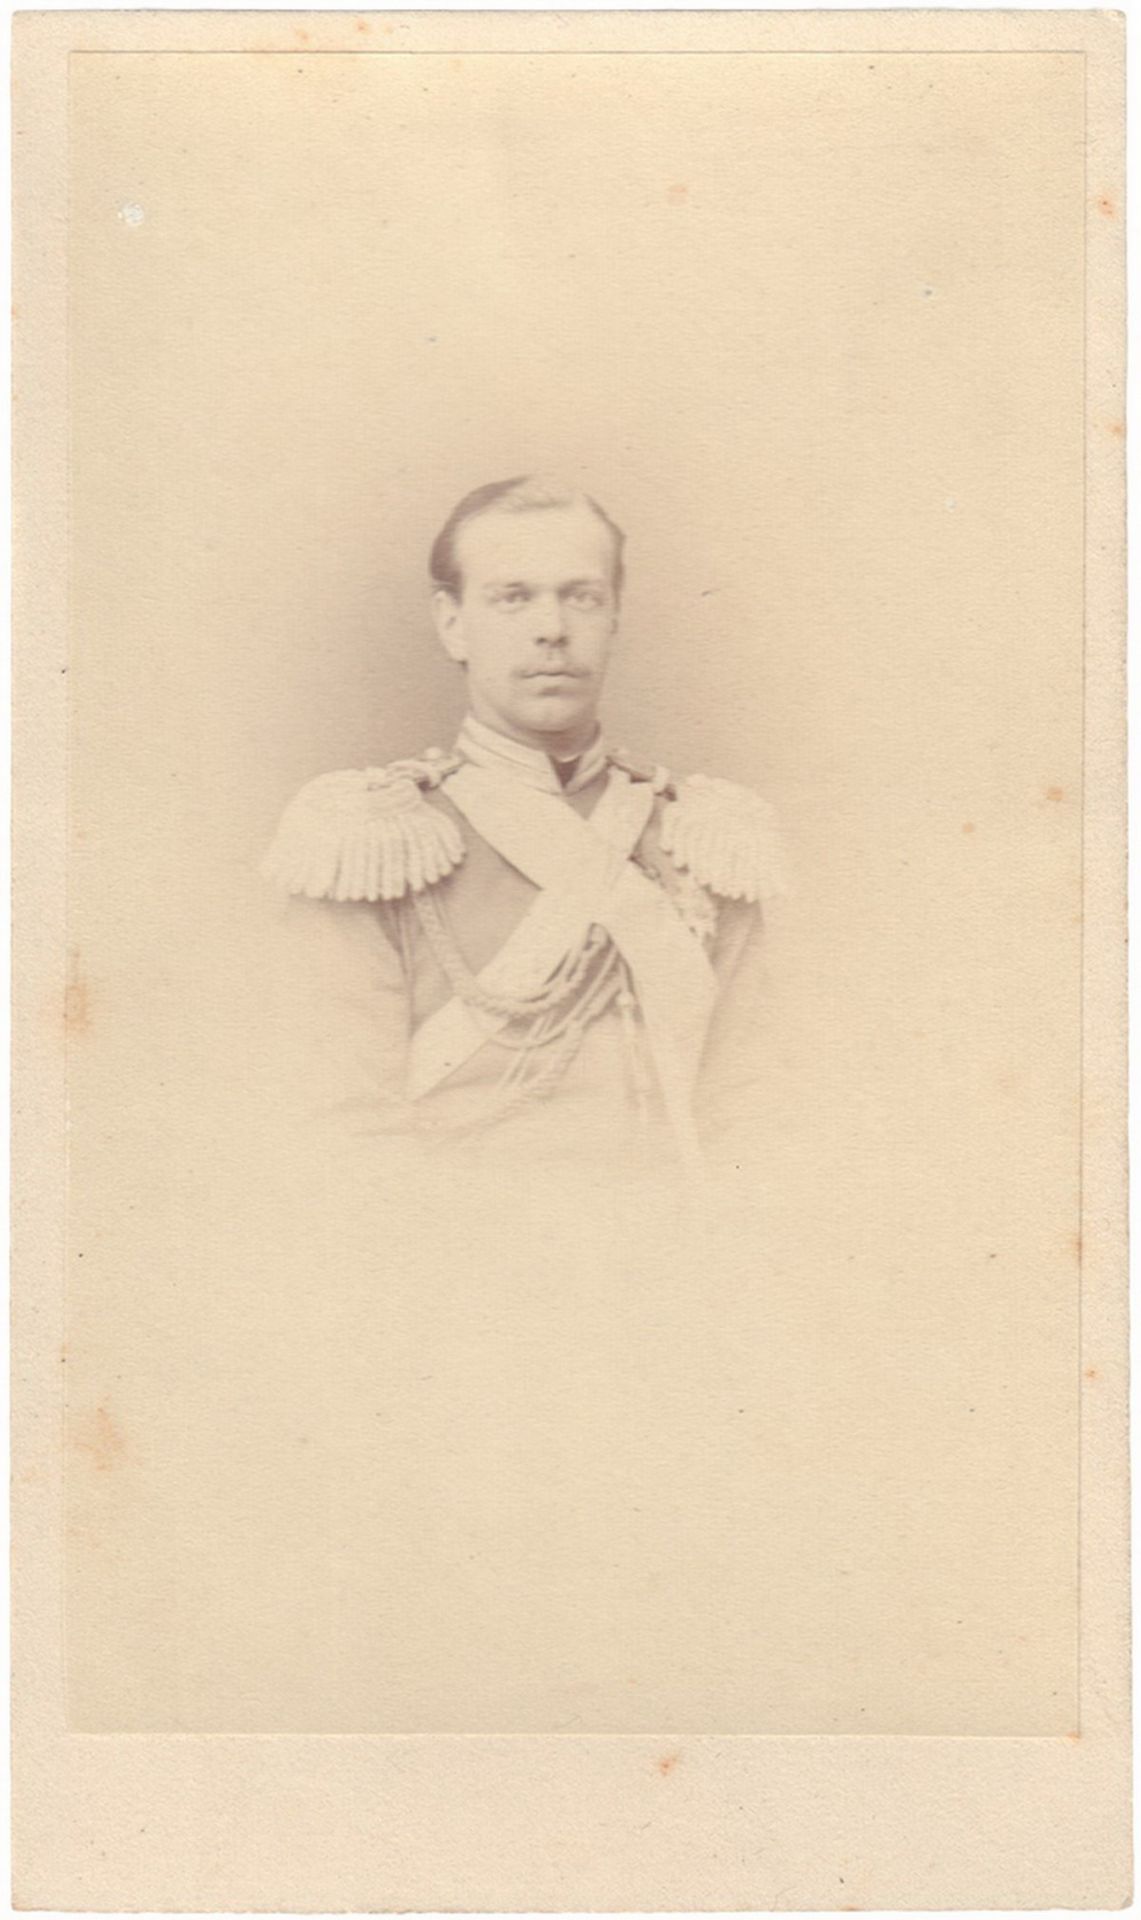 [Russian Empire. Romanov]. Denier, A. Cabinet portrait of Prince Alexander III of Russia. Photograph